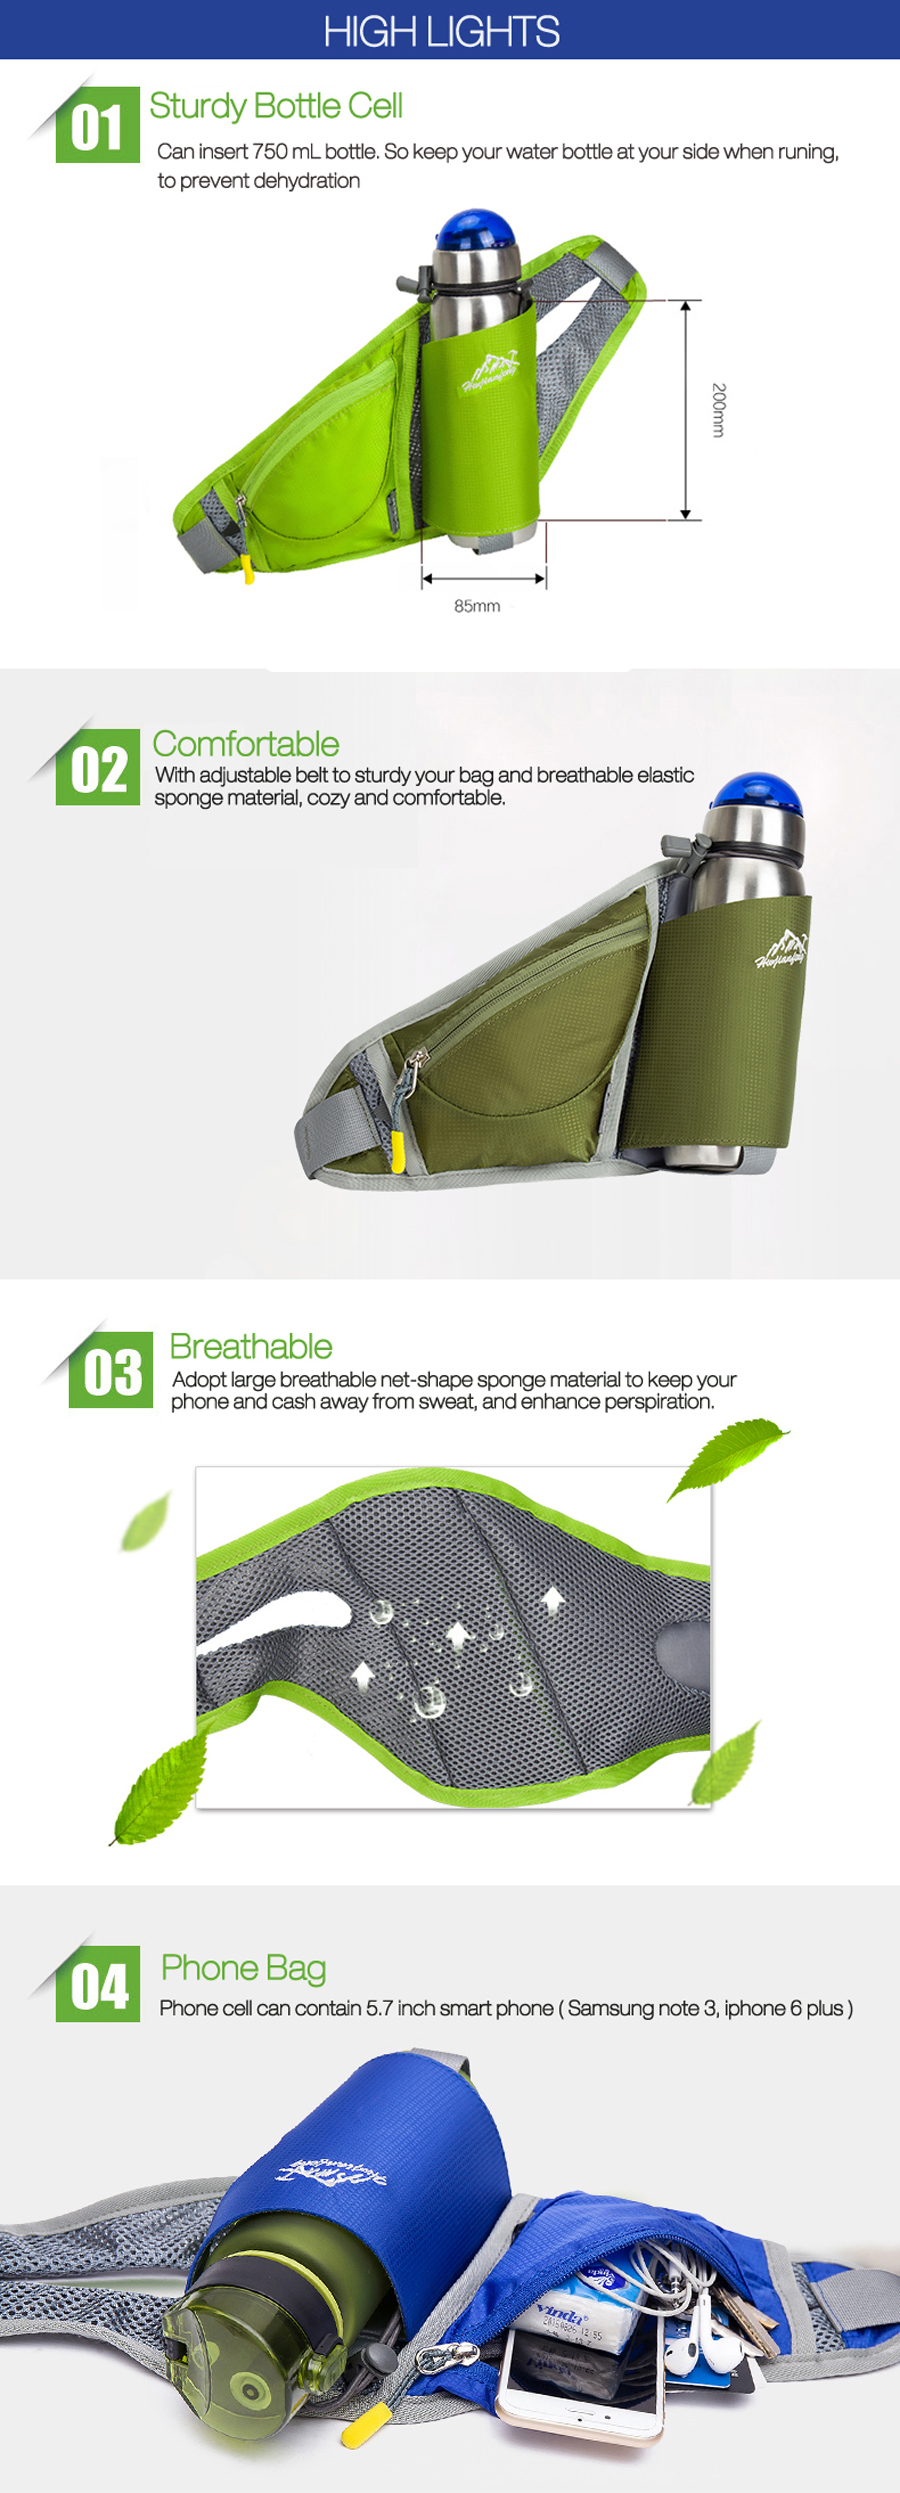 Multifunction-Bottle-Carrier-Portable-Outdoor-Waist-Bag-Sports-Pack-Bag-Storage-Phone-Bag-Wallet-1153301-7